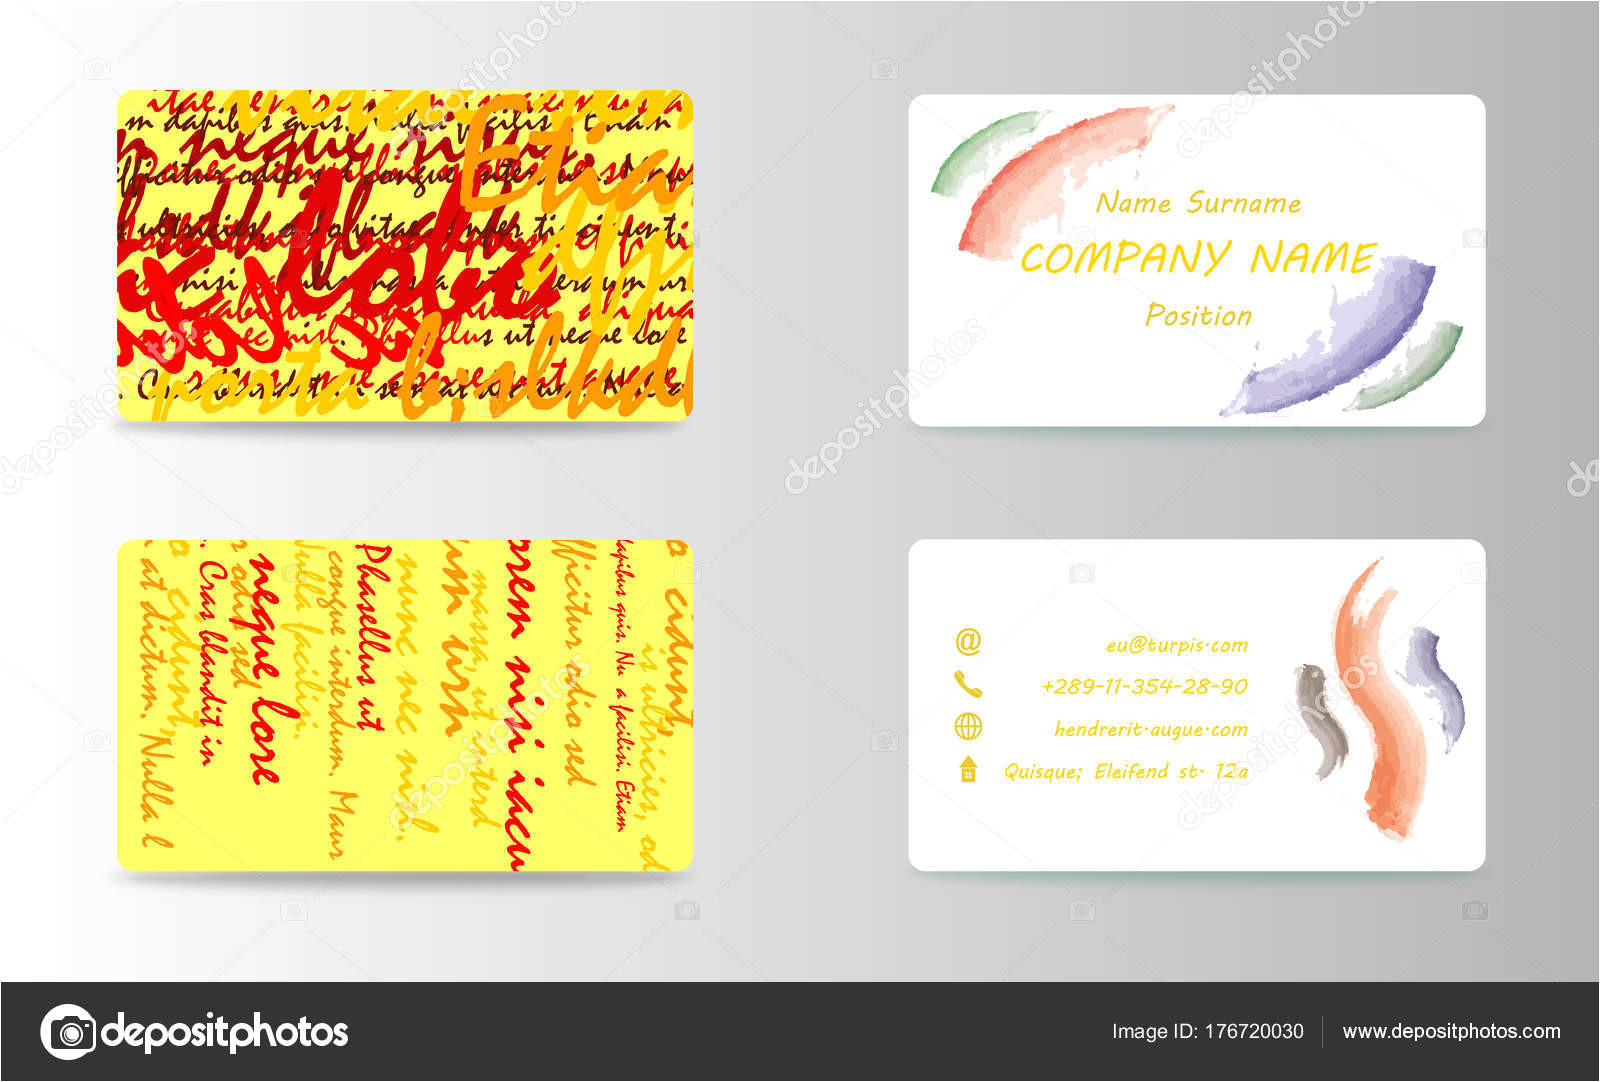 depositphotos 176720030 stock illustration set of modern business card jpg